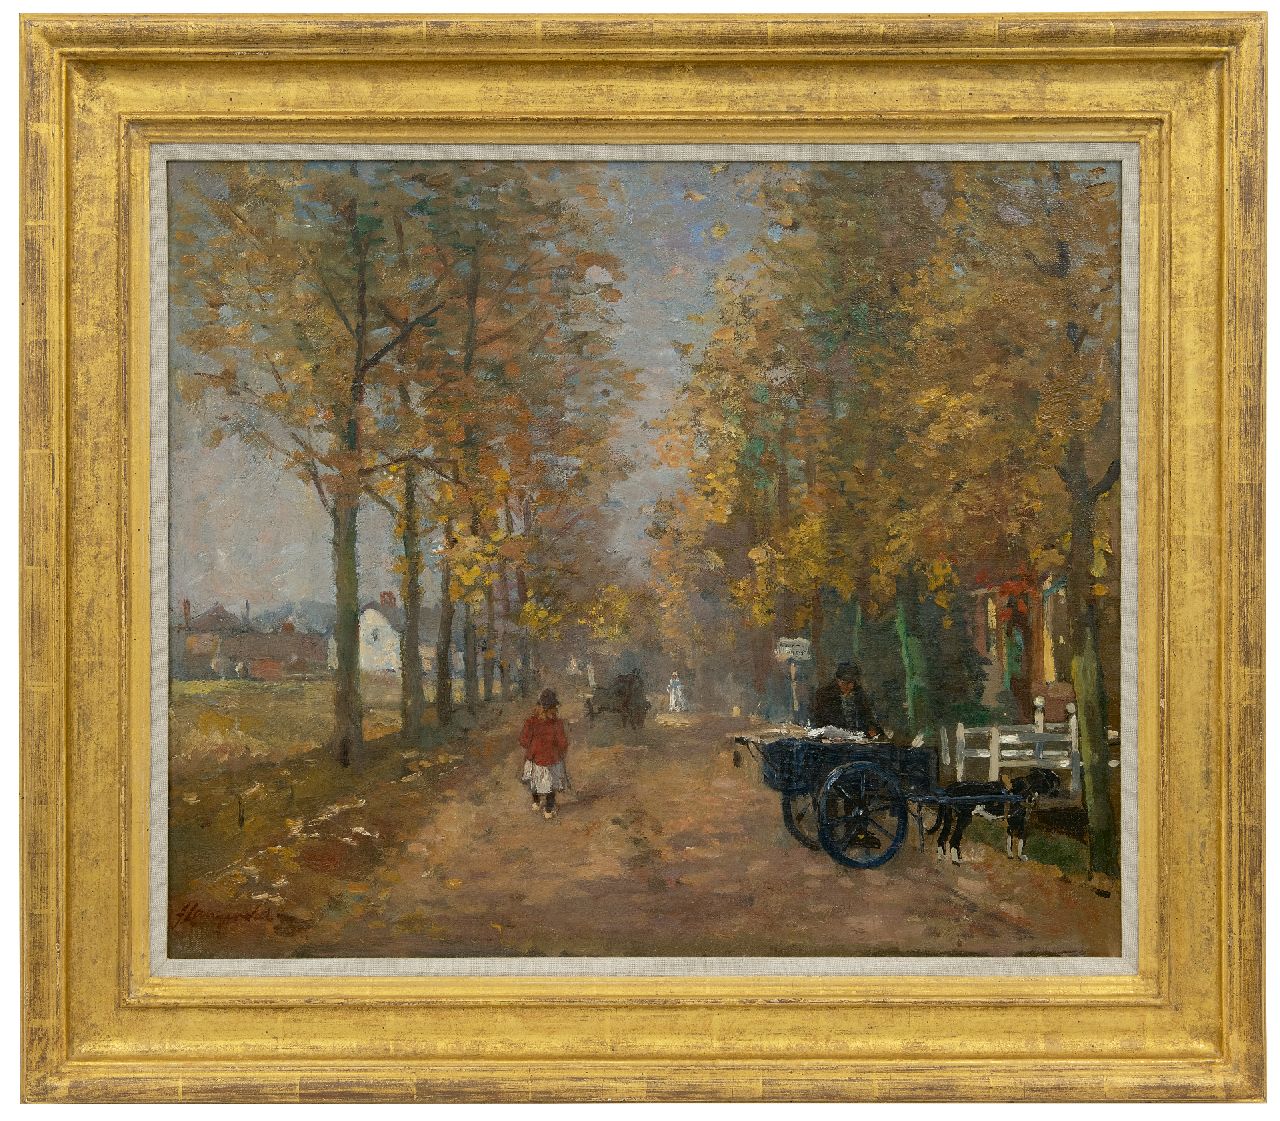 Langeveld F.A.  | Franciscus Arnoldus 'Frans' Langeveld | Paintings offered for sale | Village lane in autumn, Laren, oil on canvas 55.5 x 66.6 cm, signed l.l.